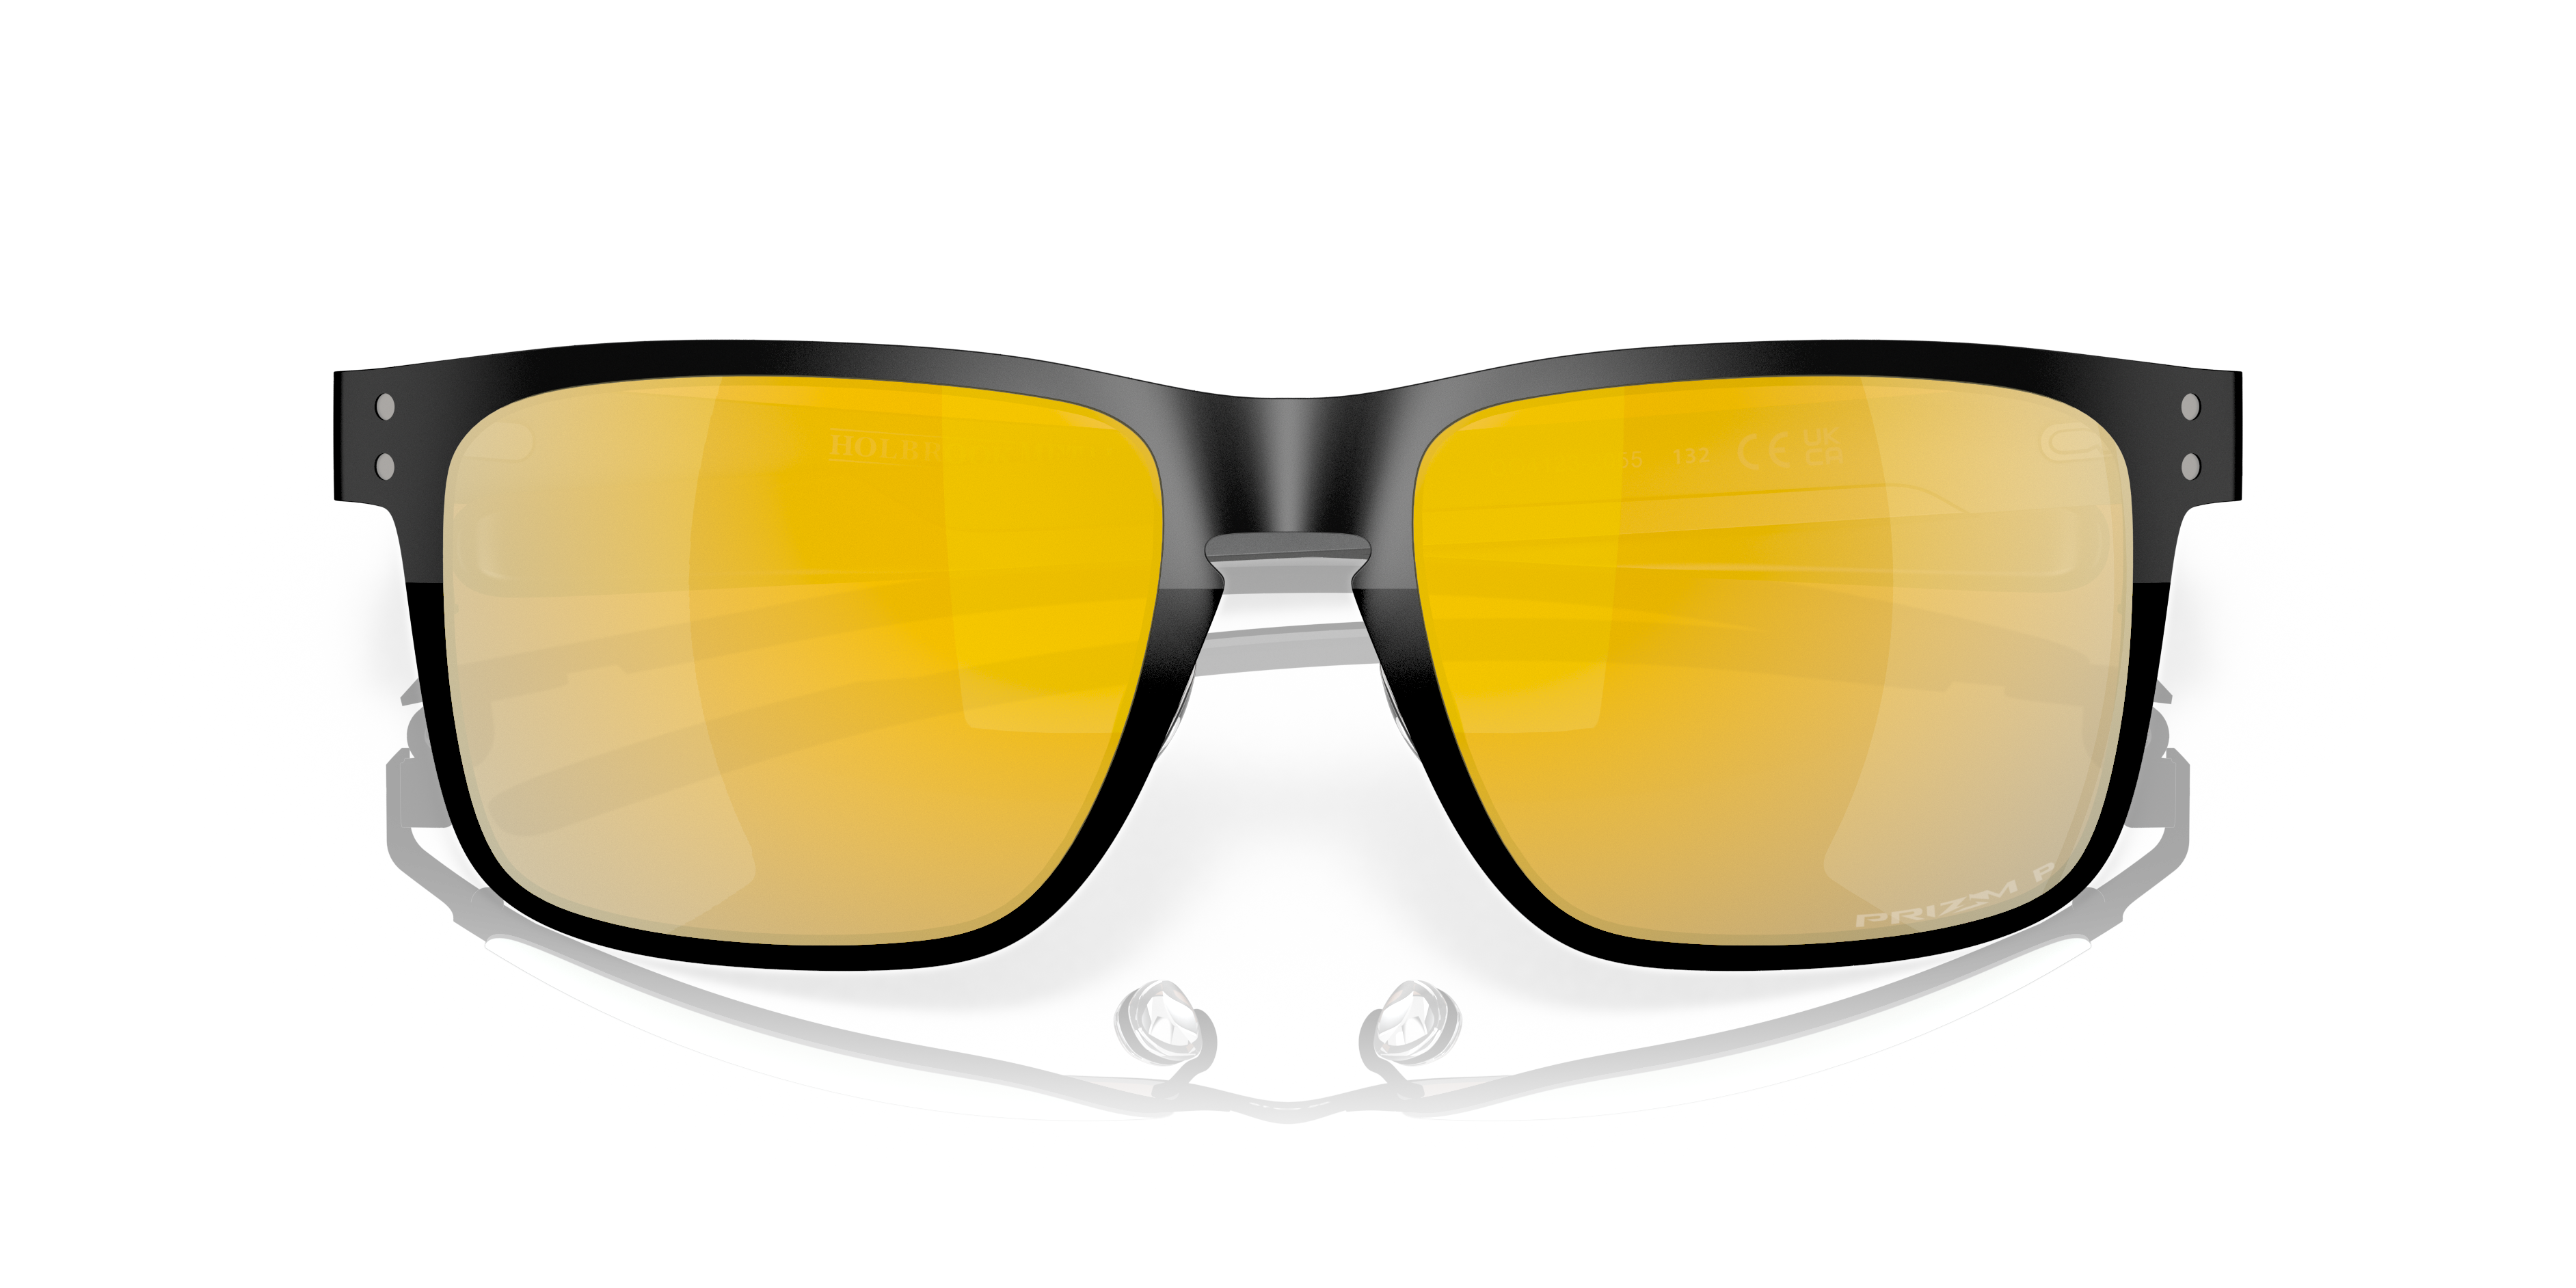 oakley gold frame sunglasses